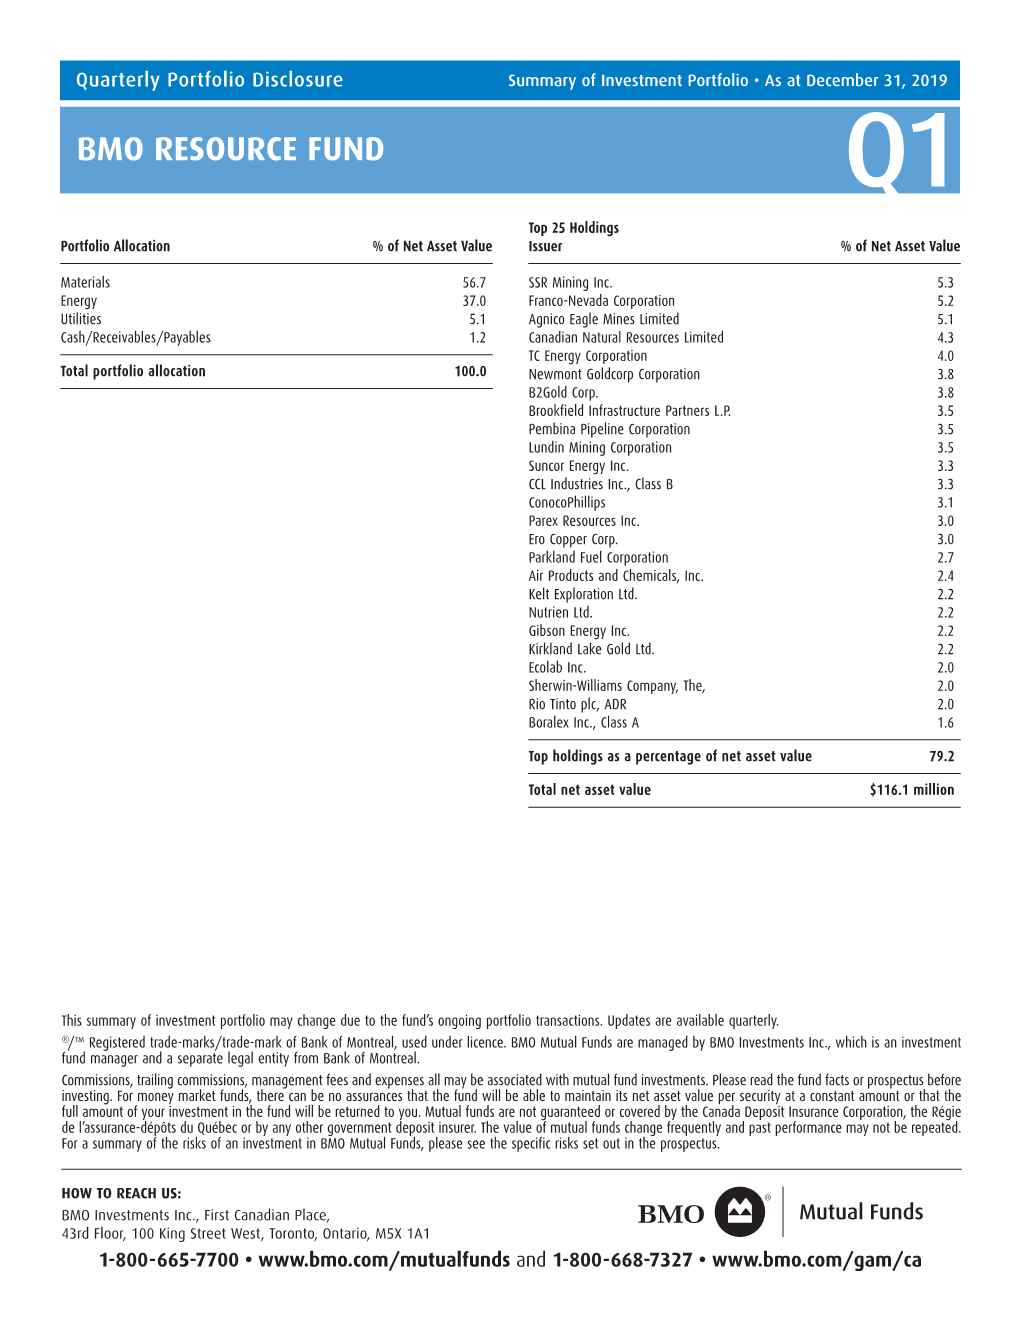 BMO RESOURCE FUND Q1 Top 25 Holdings Portfolio Allocation % of Net Asset Value Issuer % of Net Asset Value